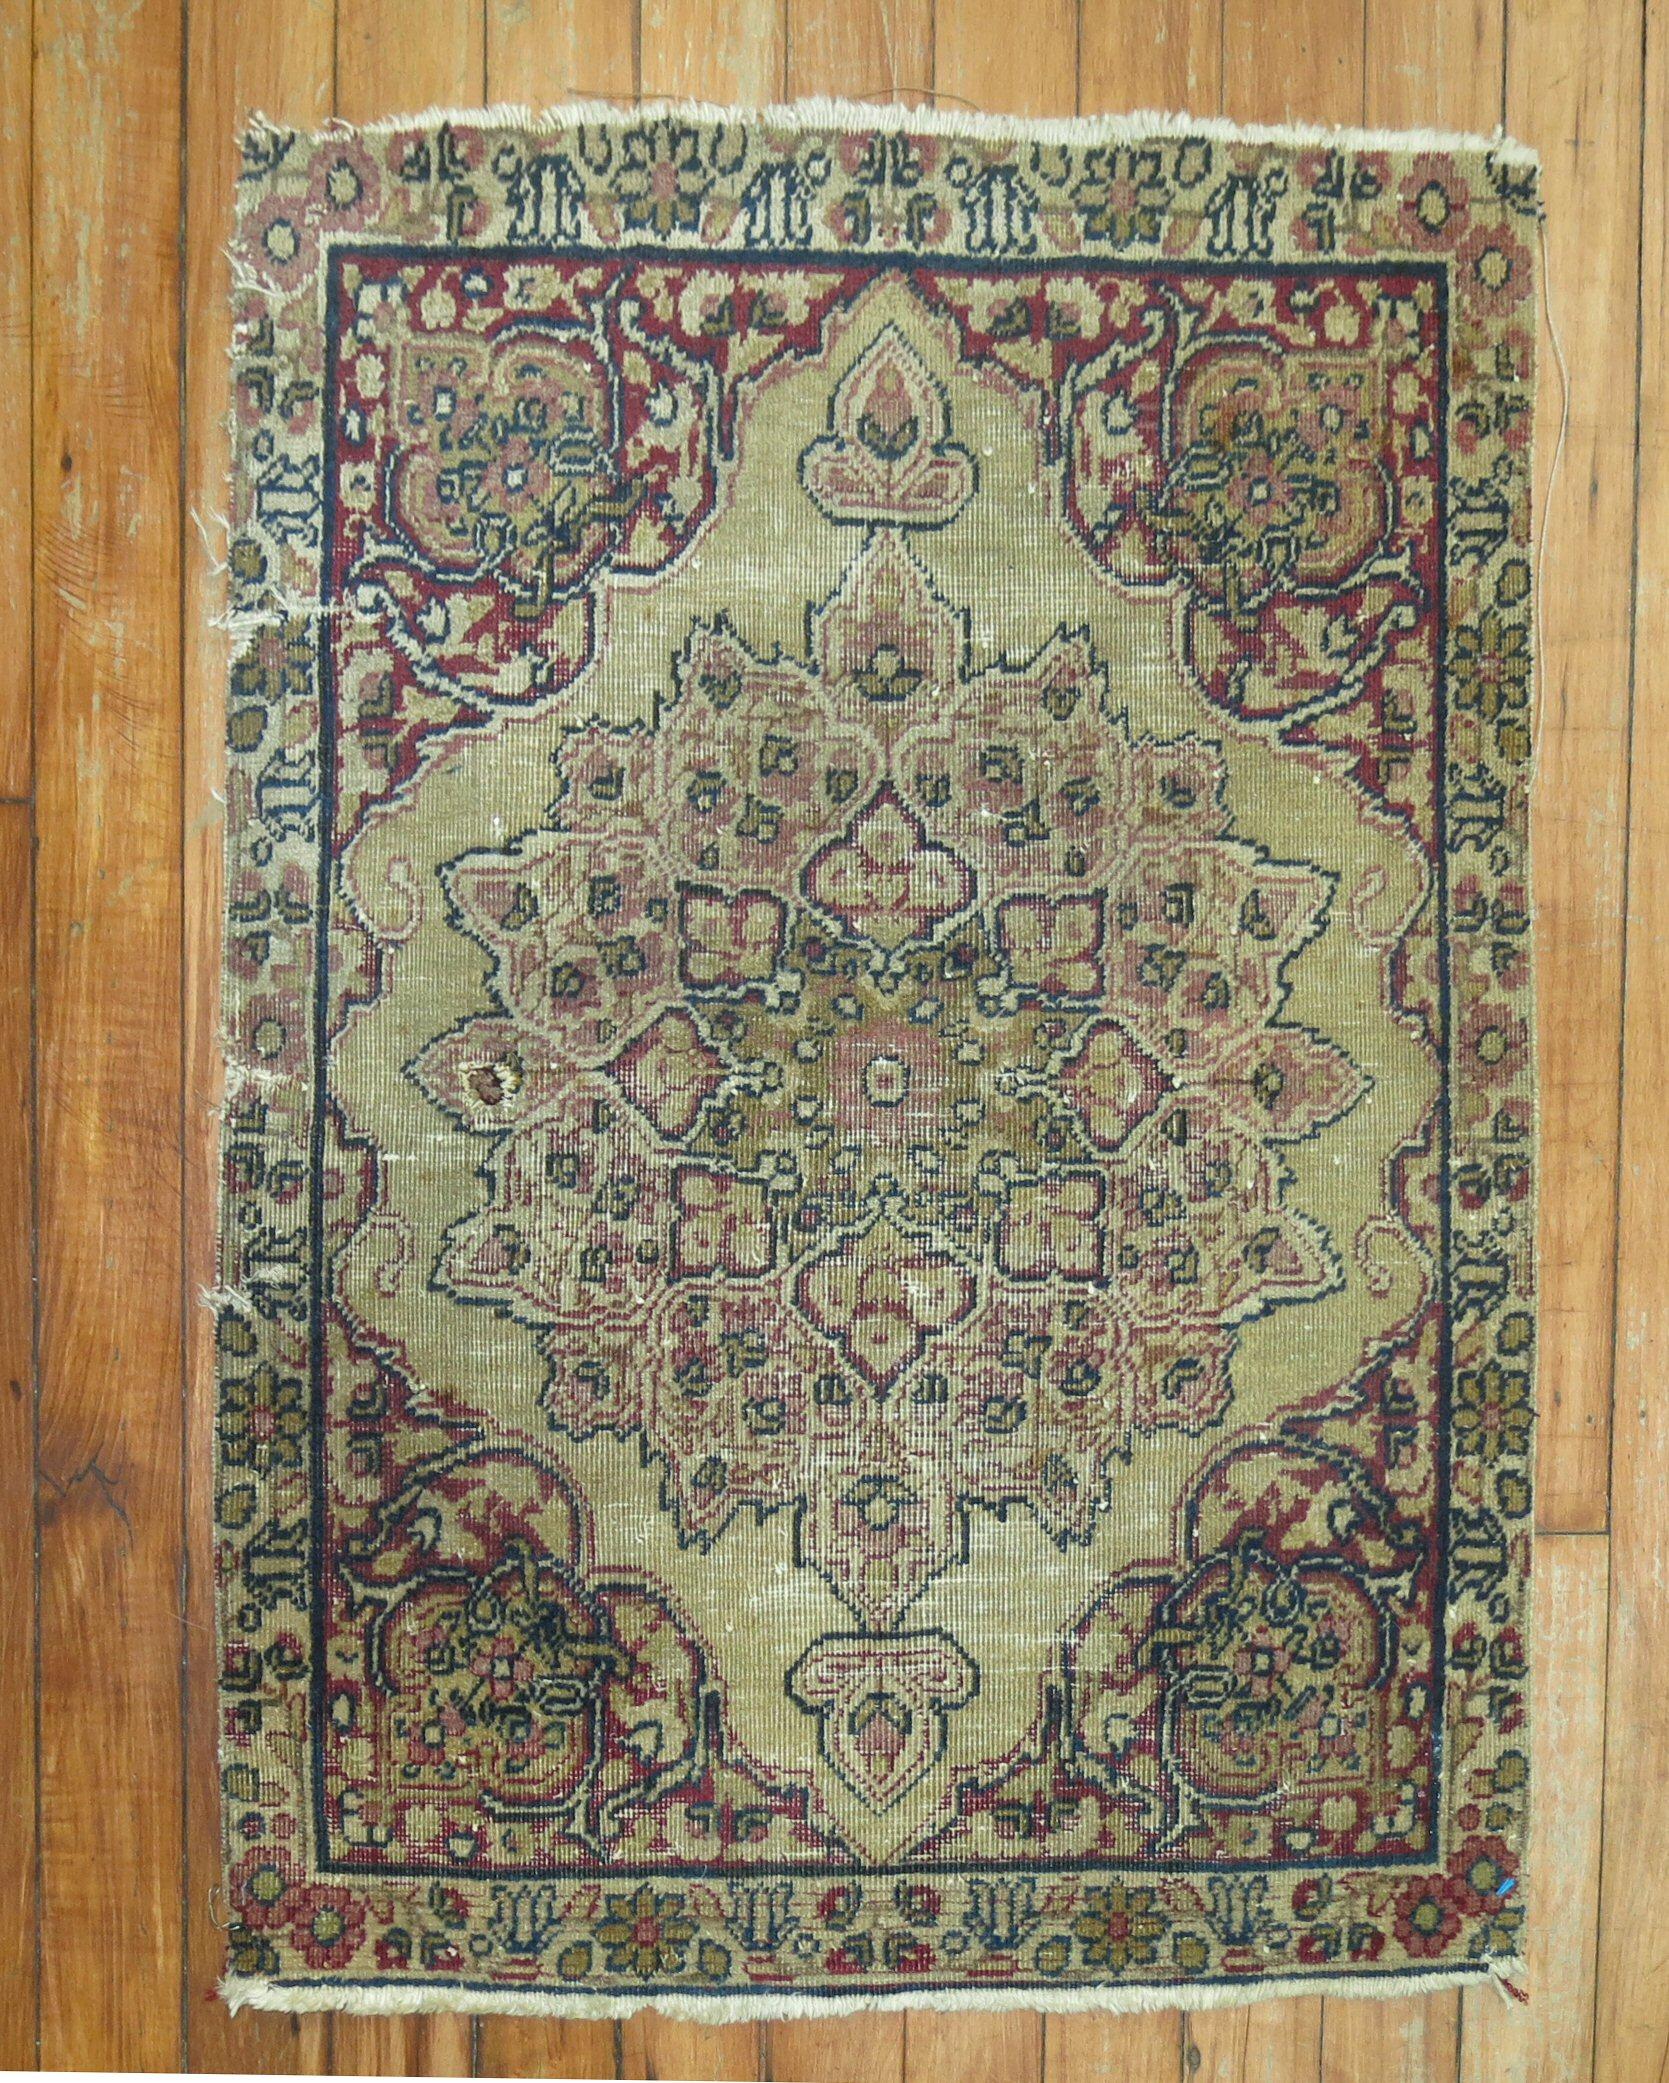 Late 19th Century worn Persian Lavar Kerman traditional mat size rug.

Measures: 1'9